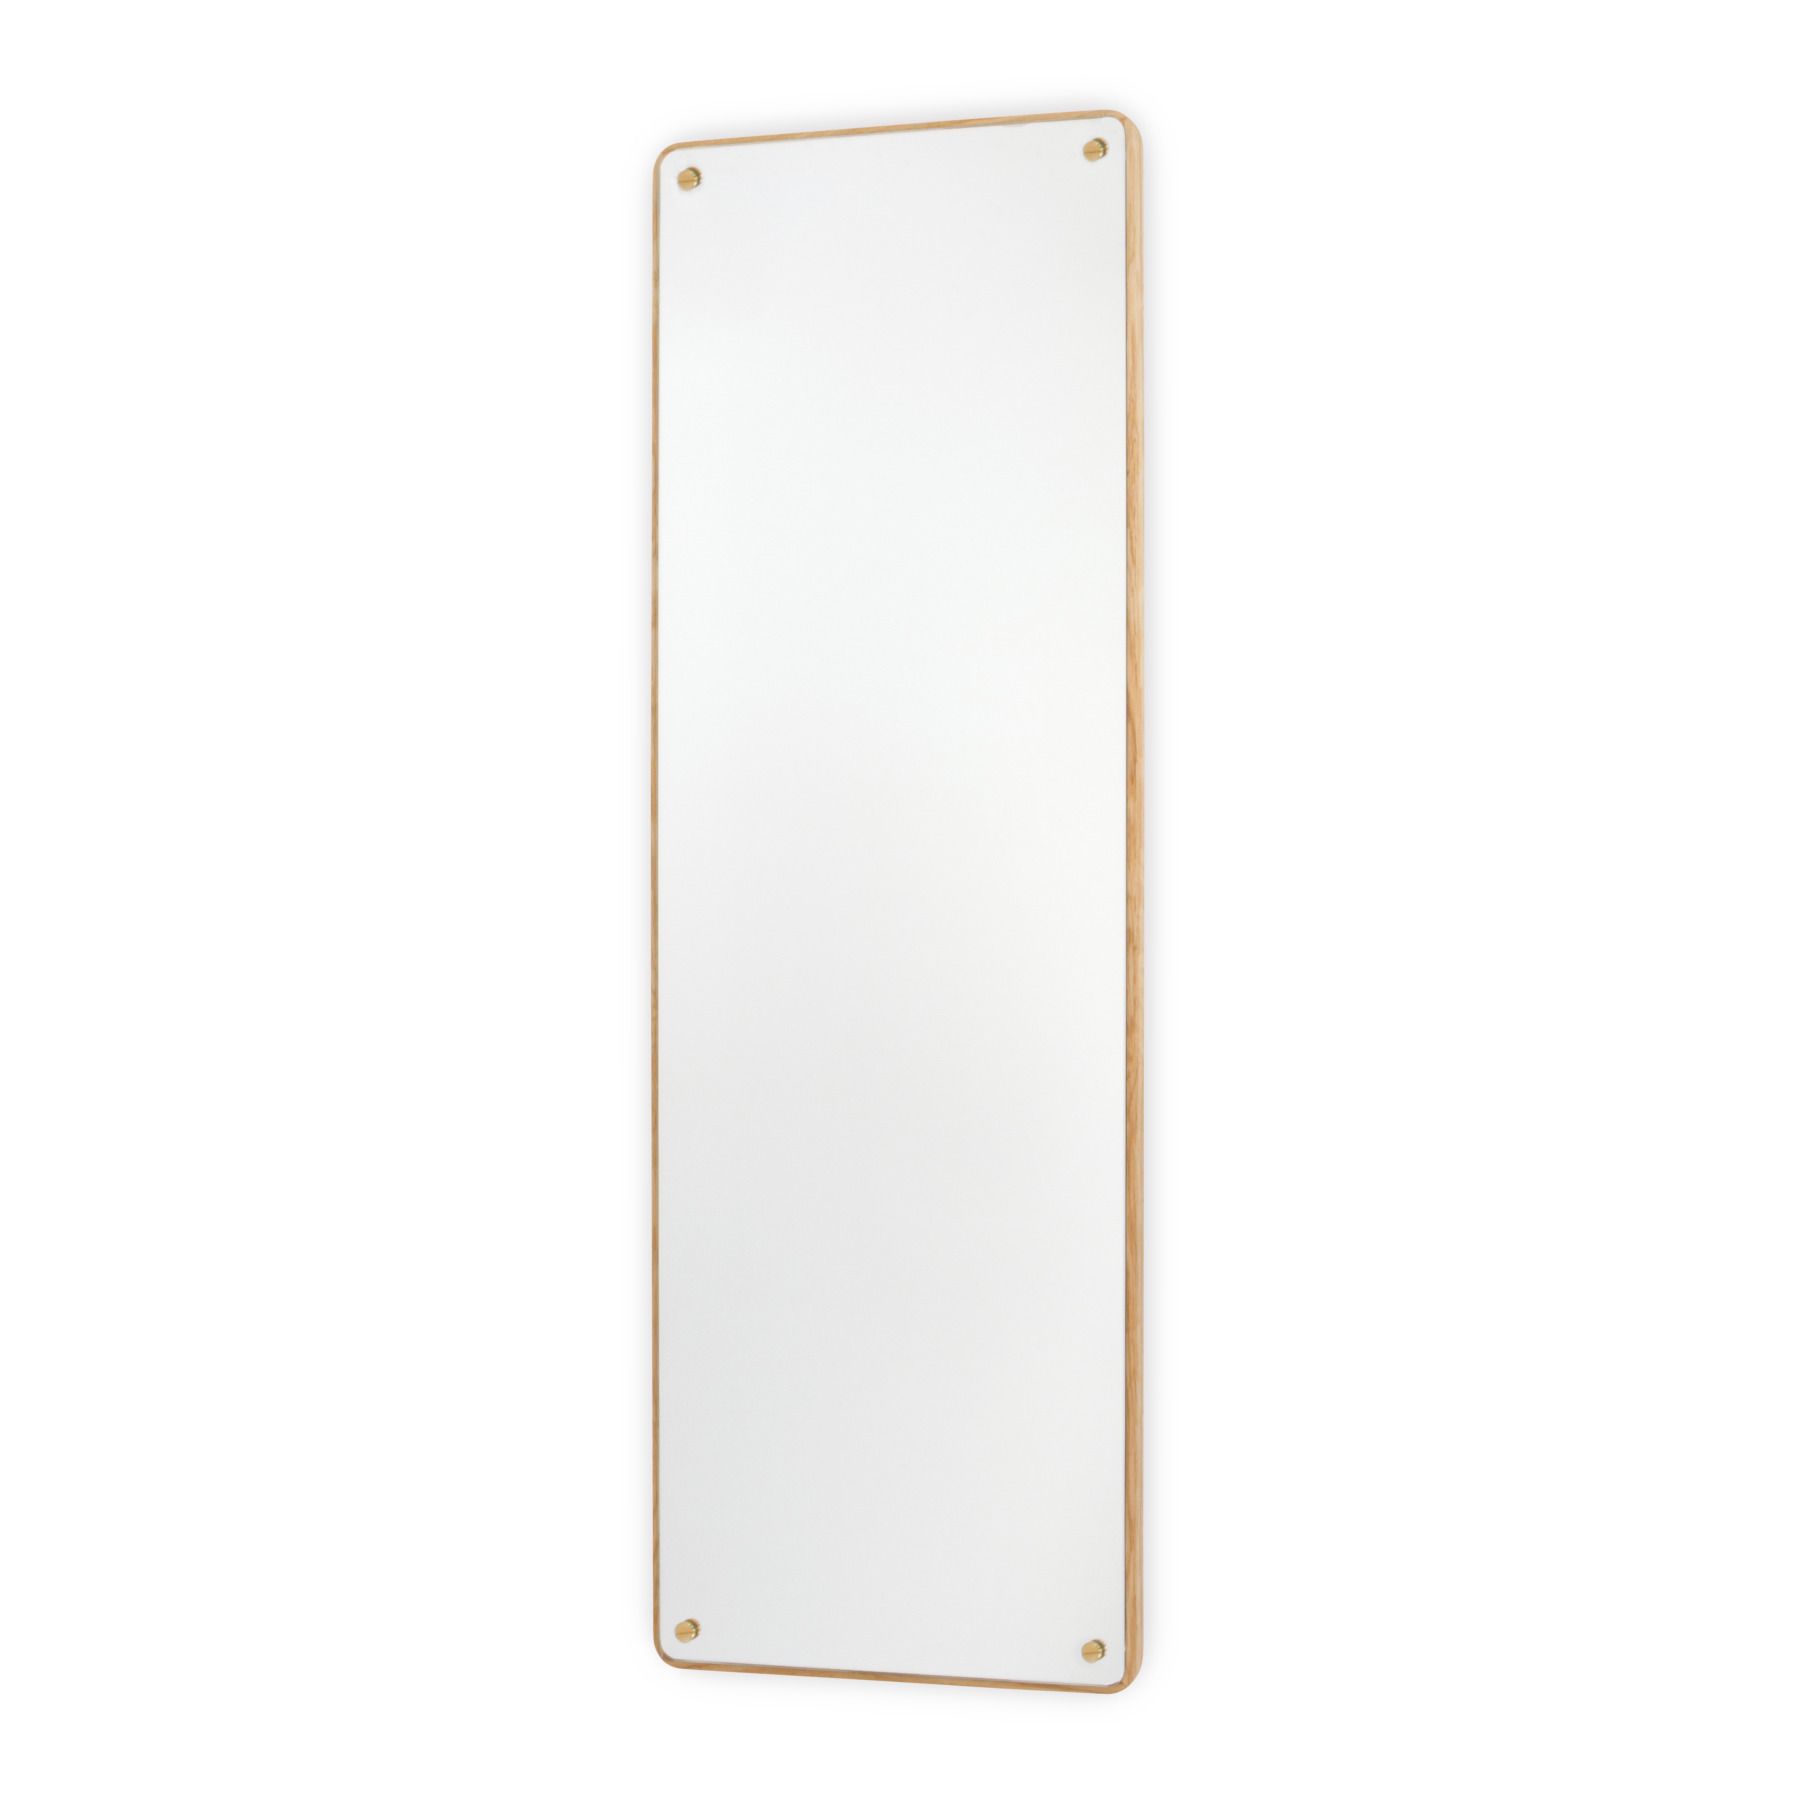 Frama - Miroir rectangulaire RM1 - Chêne